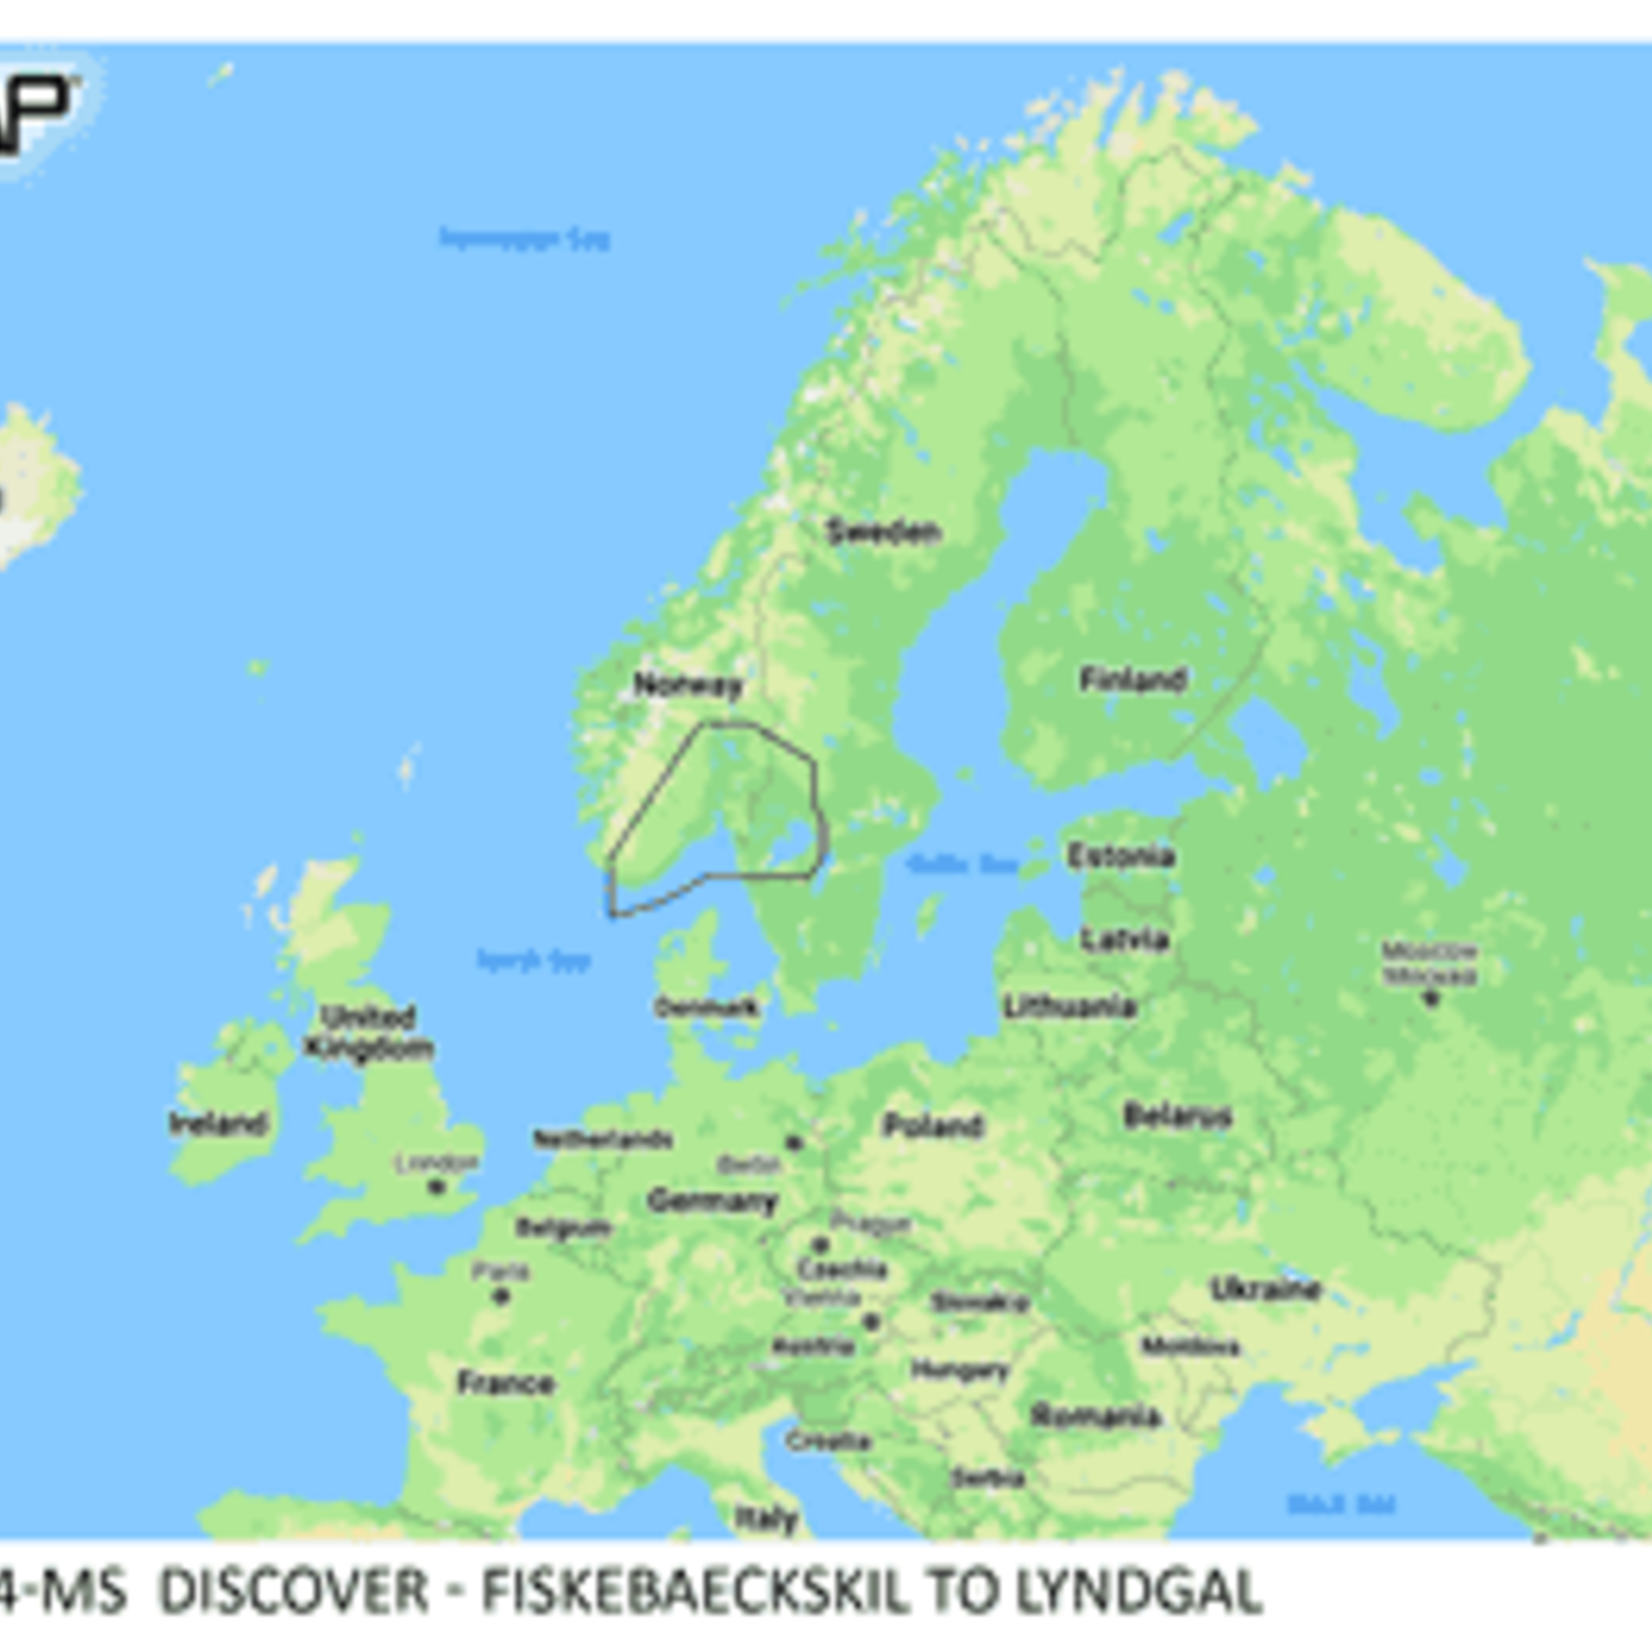 C-MAP DISCOVER - Fiskebäckskil to Lyndgal